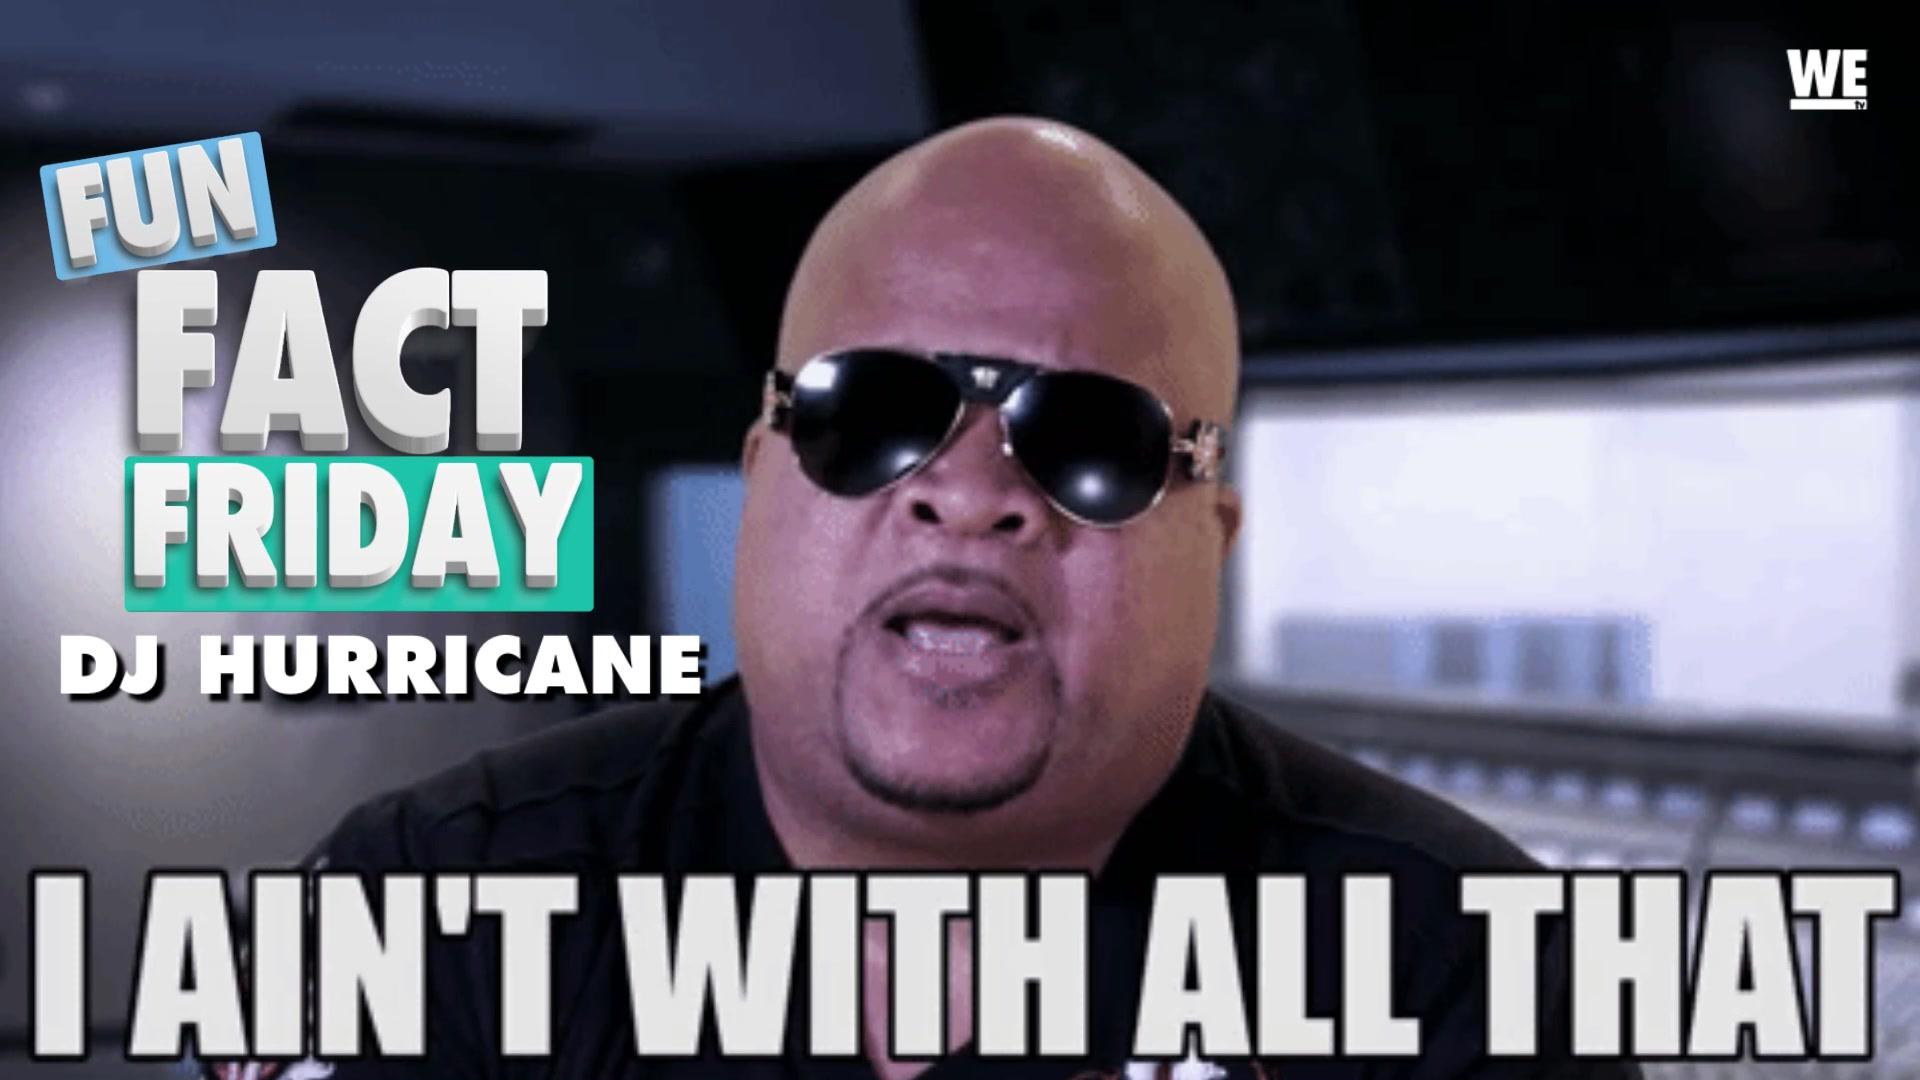 #FunFactFriday: DJ Hurricane